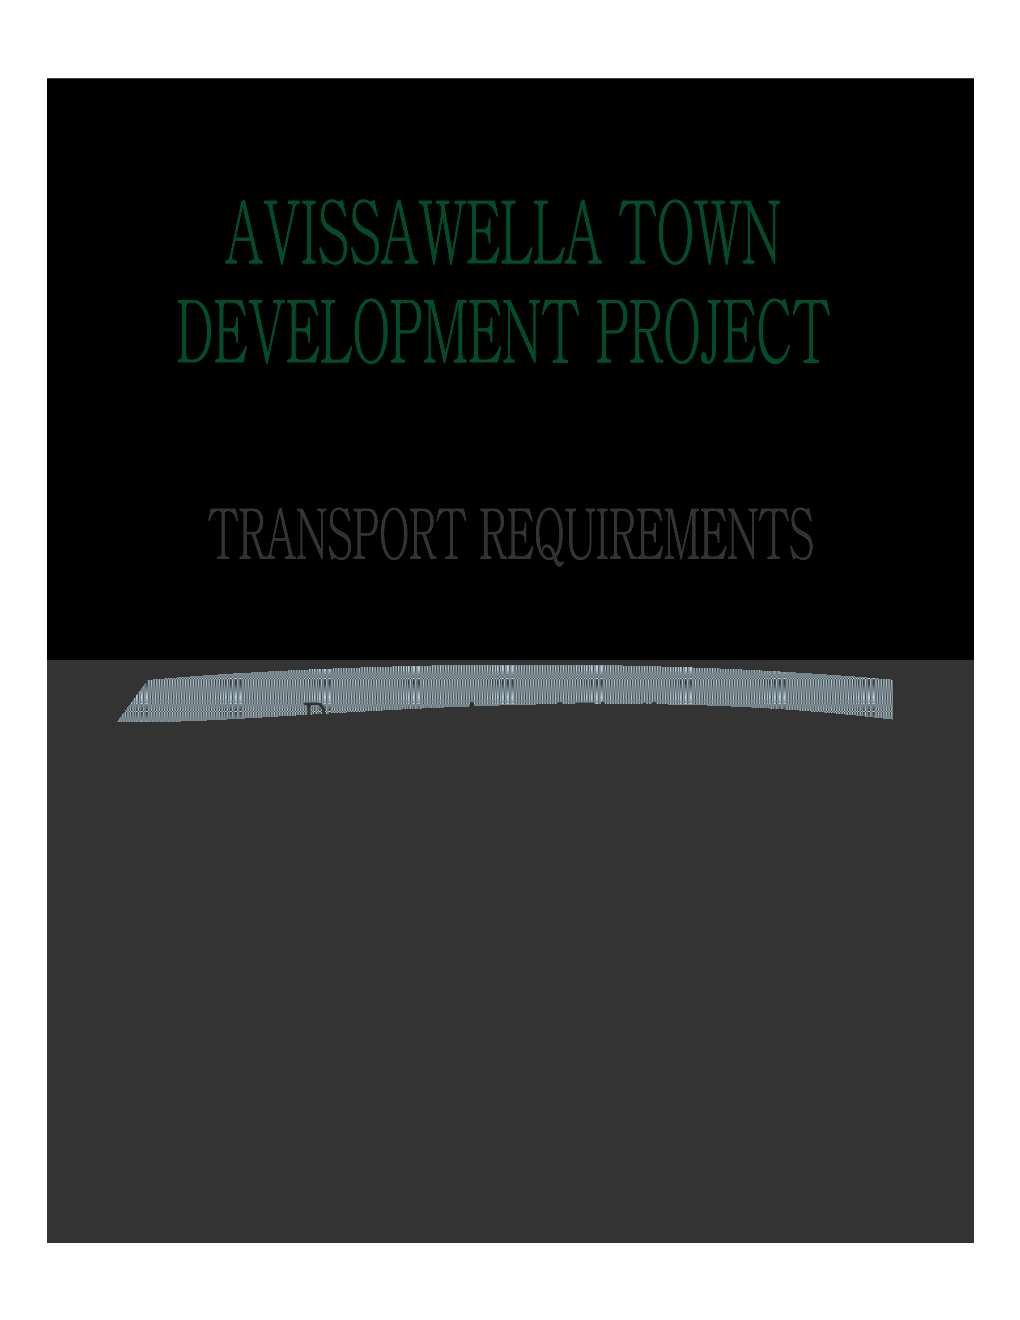 Avissawella Town Development Project